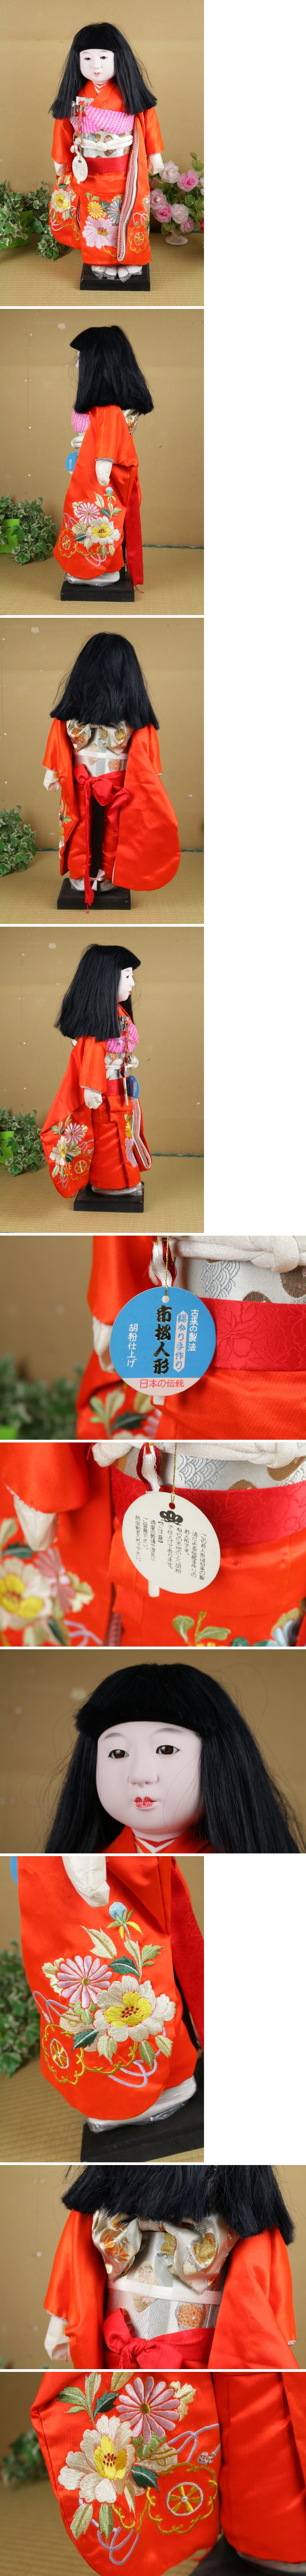 【海外輸入】市松人形 女の子 総ねり手作り 胡粉仕上げ 日本人形 市松人形